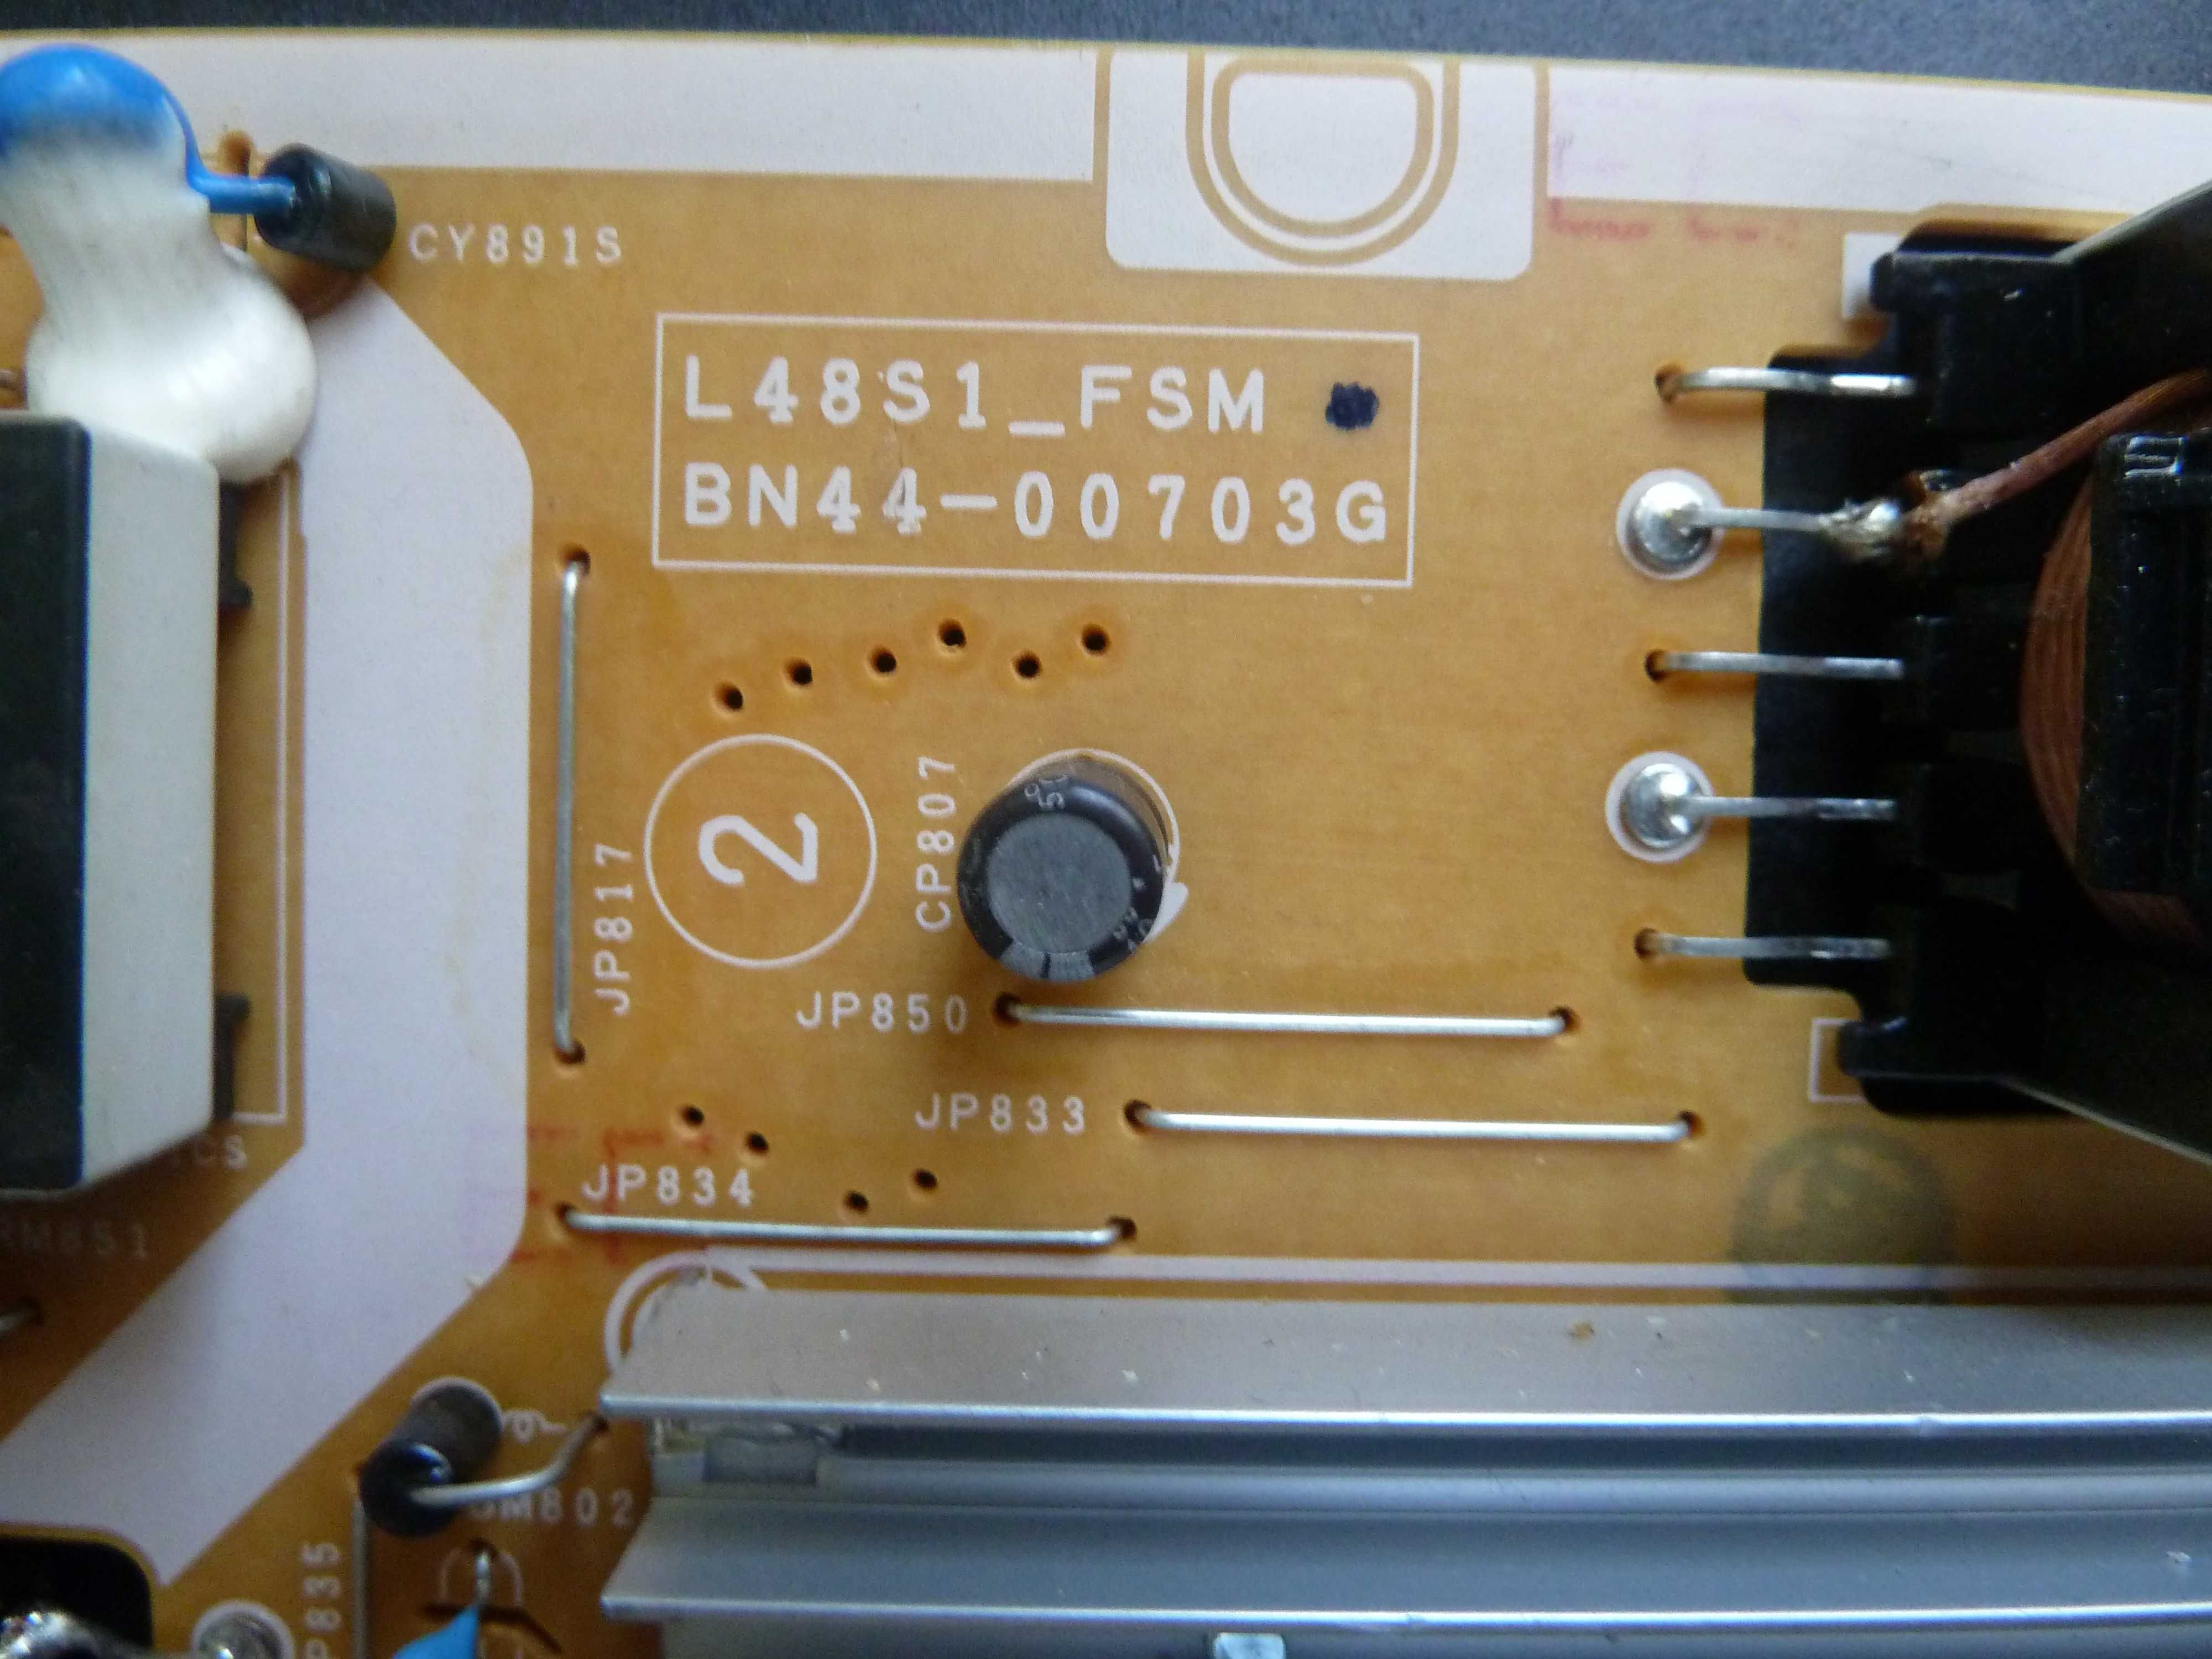 BN41-2353B-dezmembrez samsung ue40j6250 smart cu ecran spart,